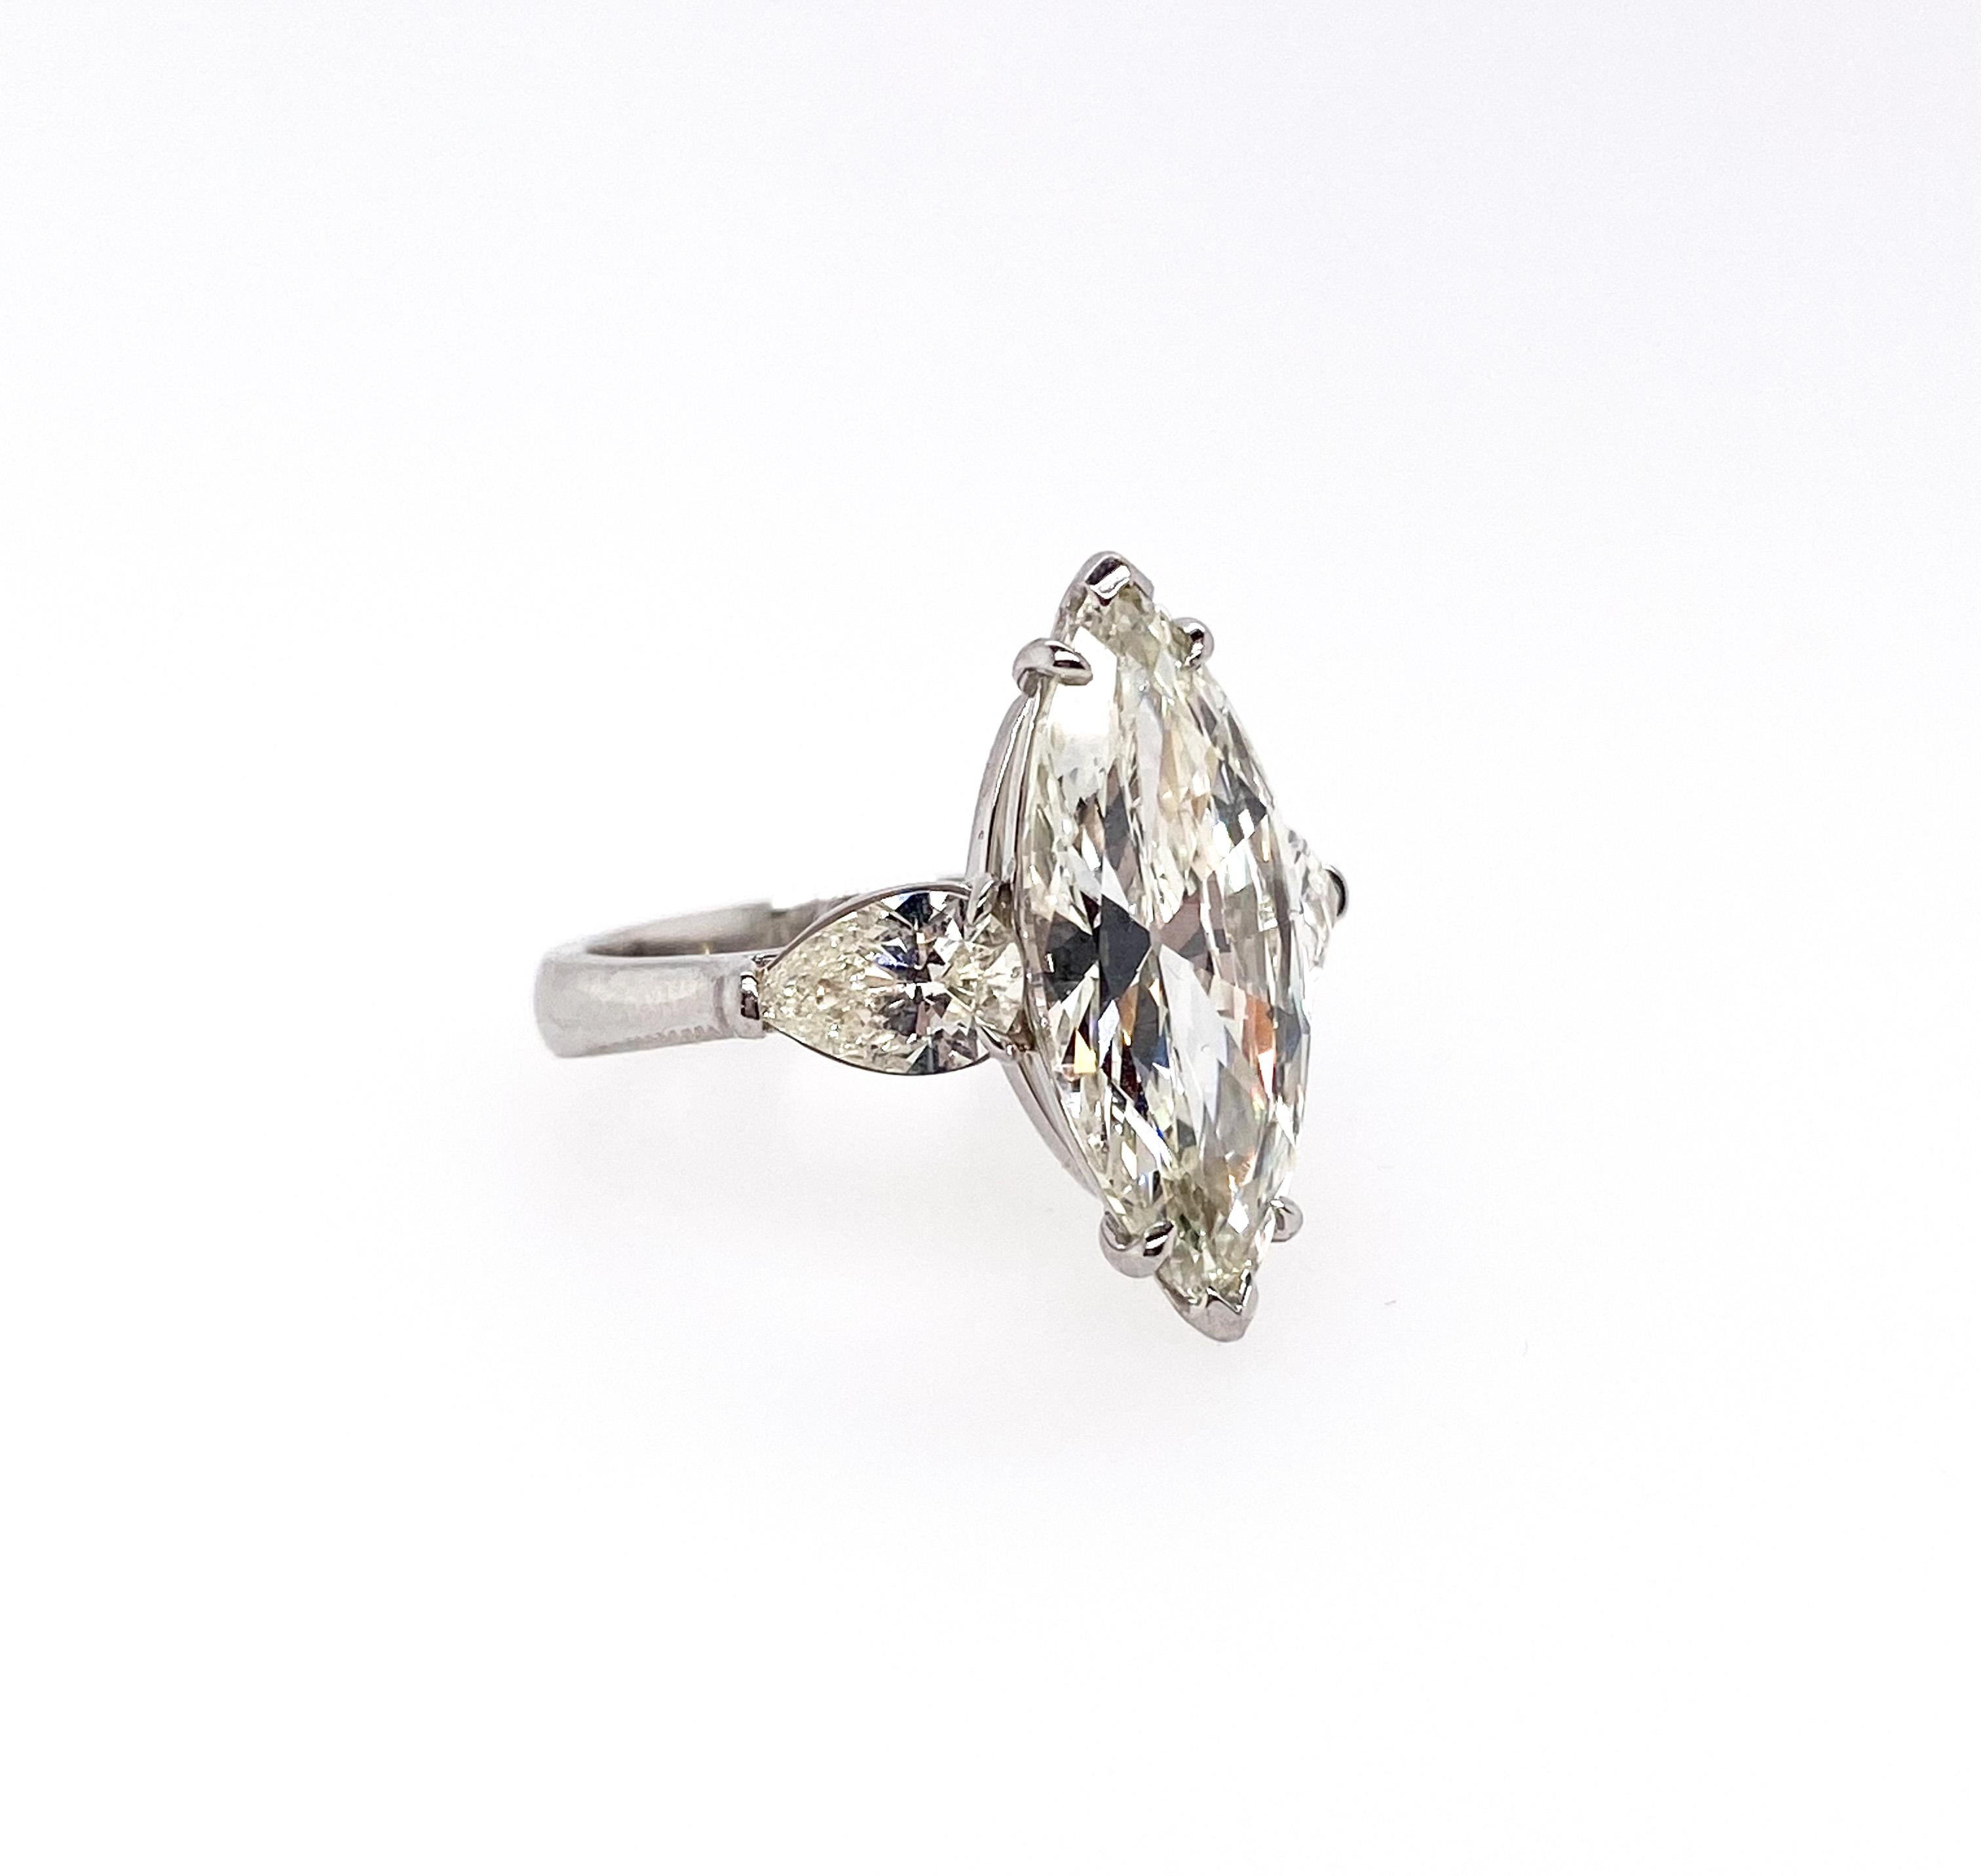 4 carat marquise diamond ring